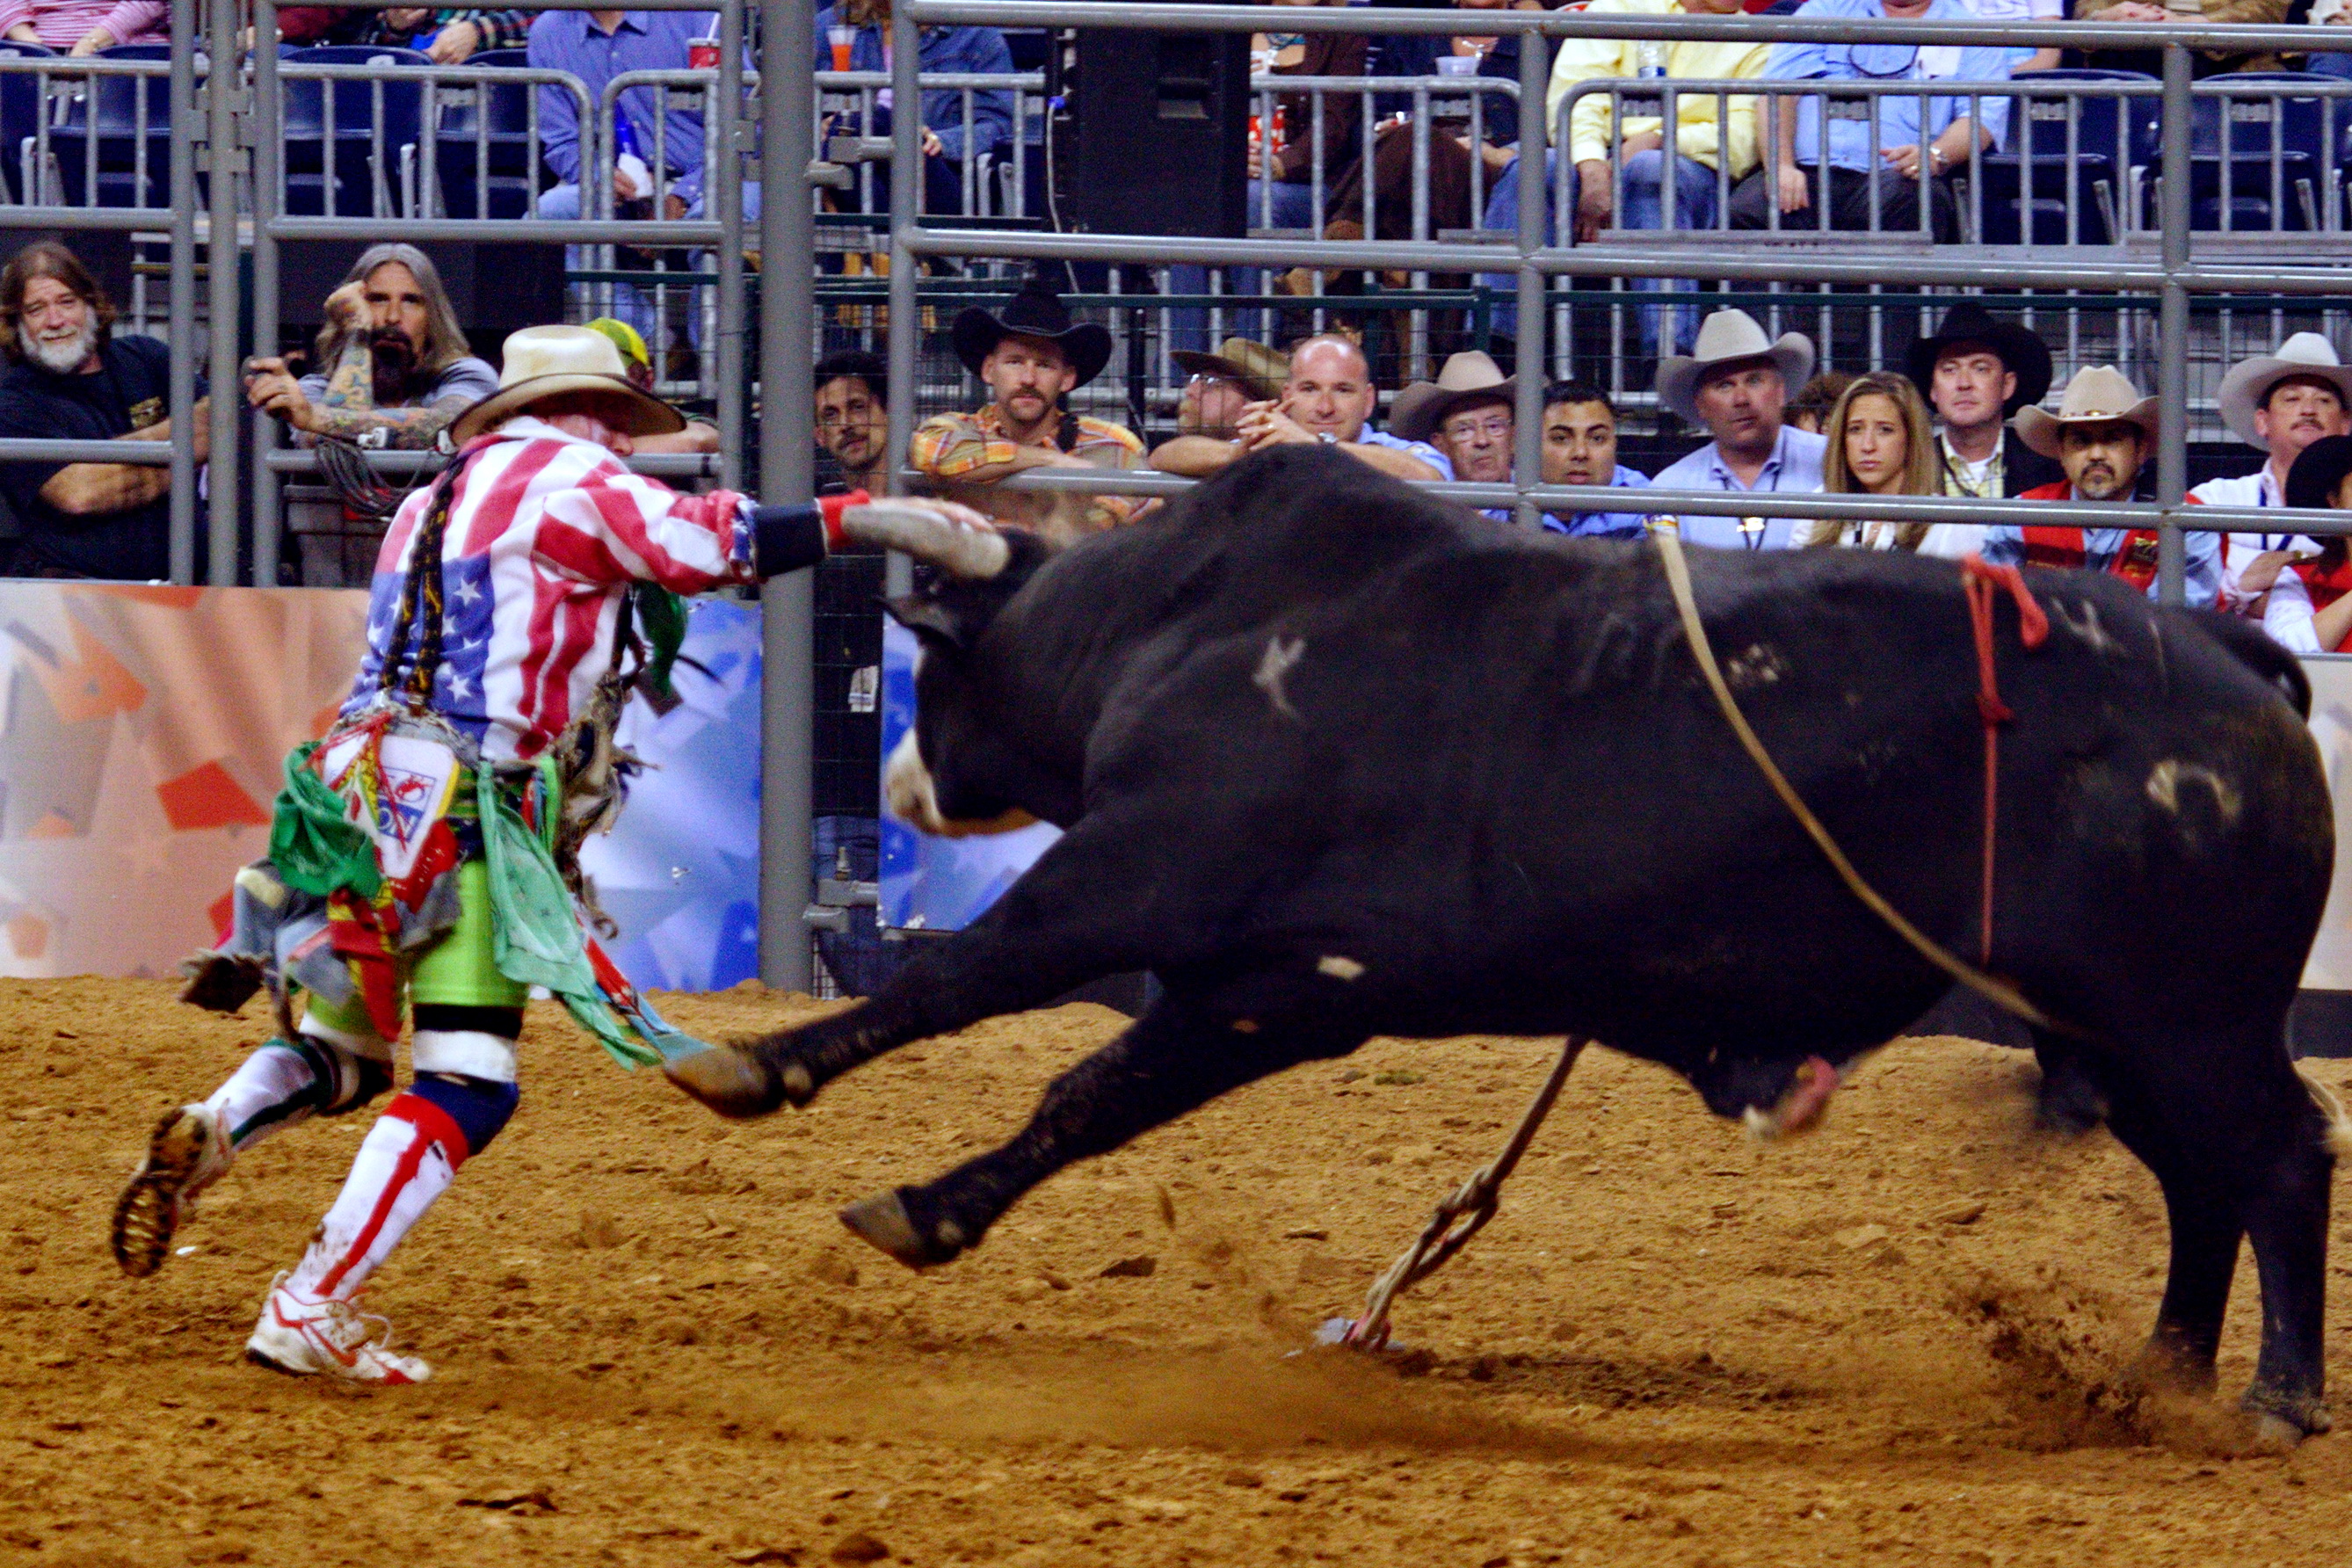 Rodeo Bull fighter